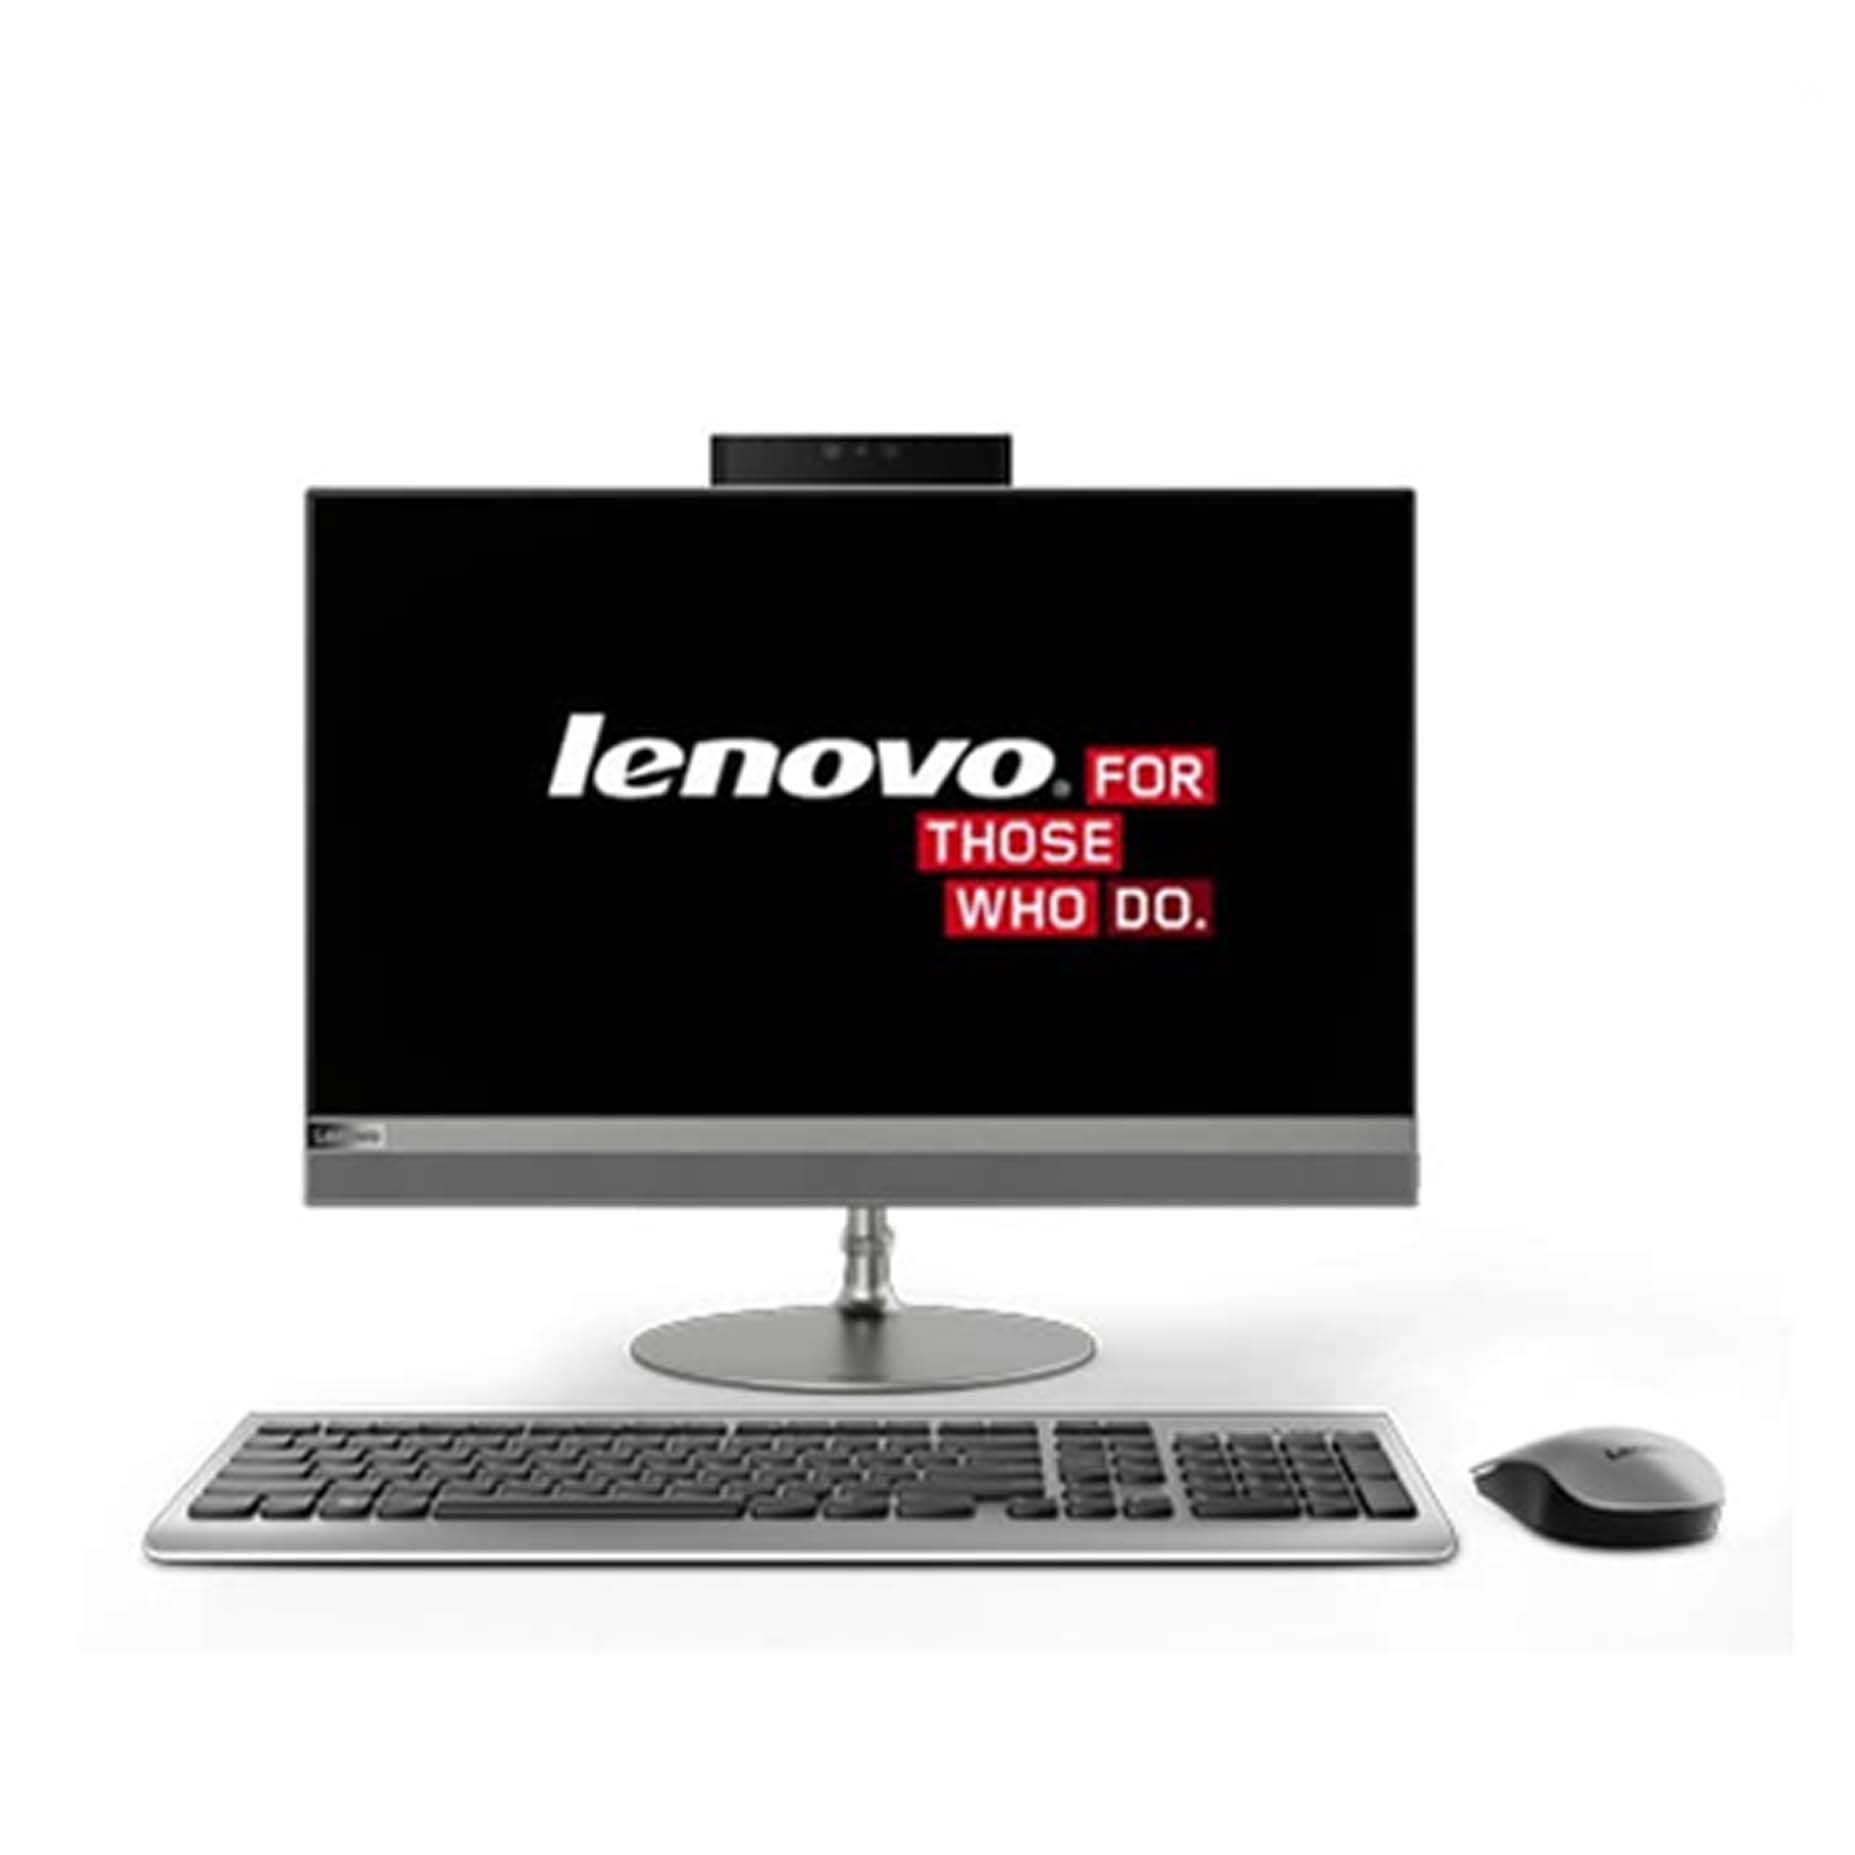 Harga Lenovo IdeaCentre 520-22ICB 0GID All in One i5-8400T 4GB 2TB ATI 530 2GB Win10 21.5 Inch Grey